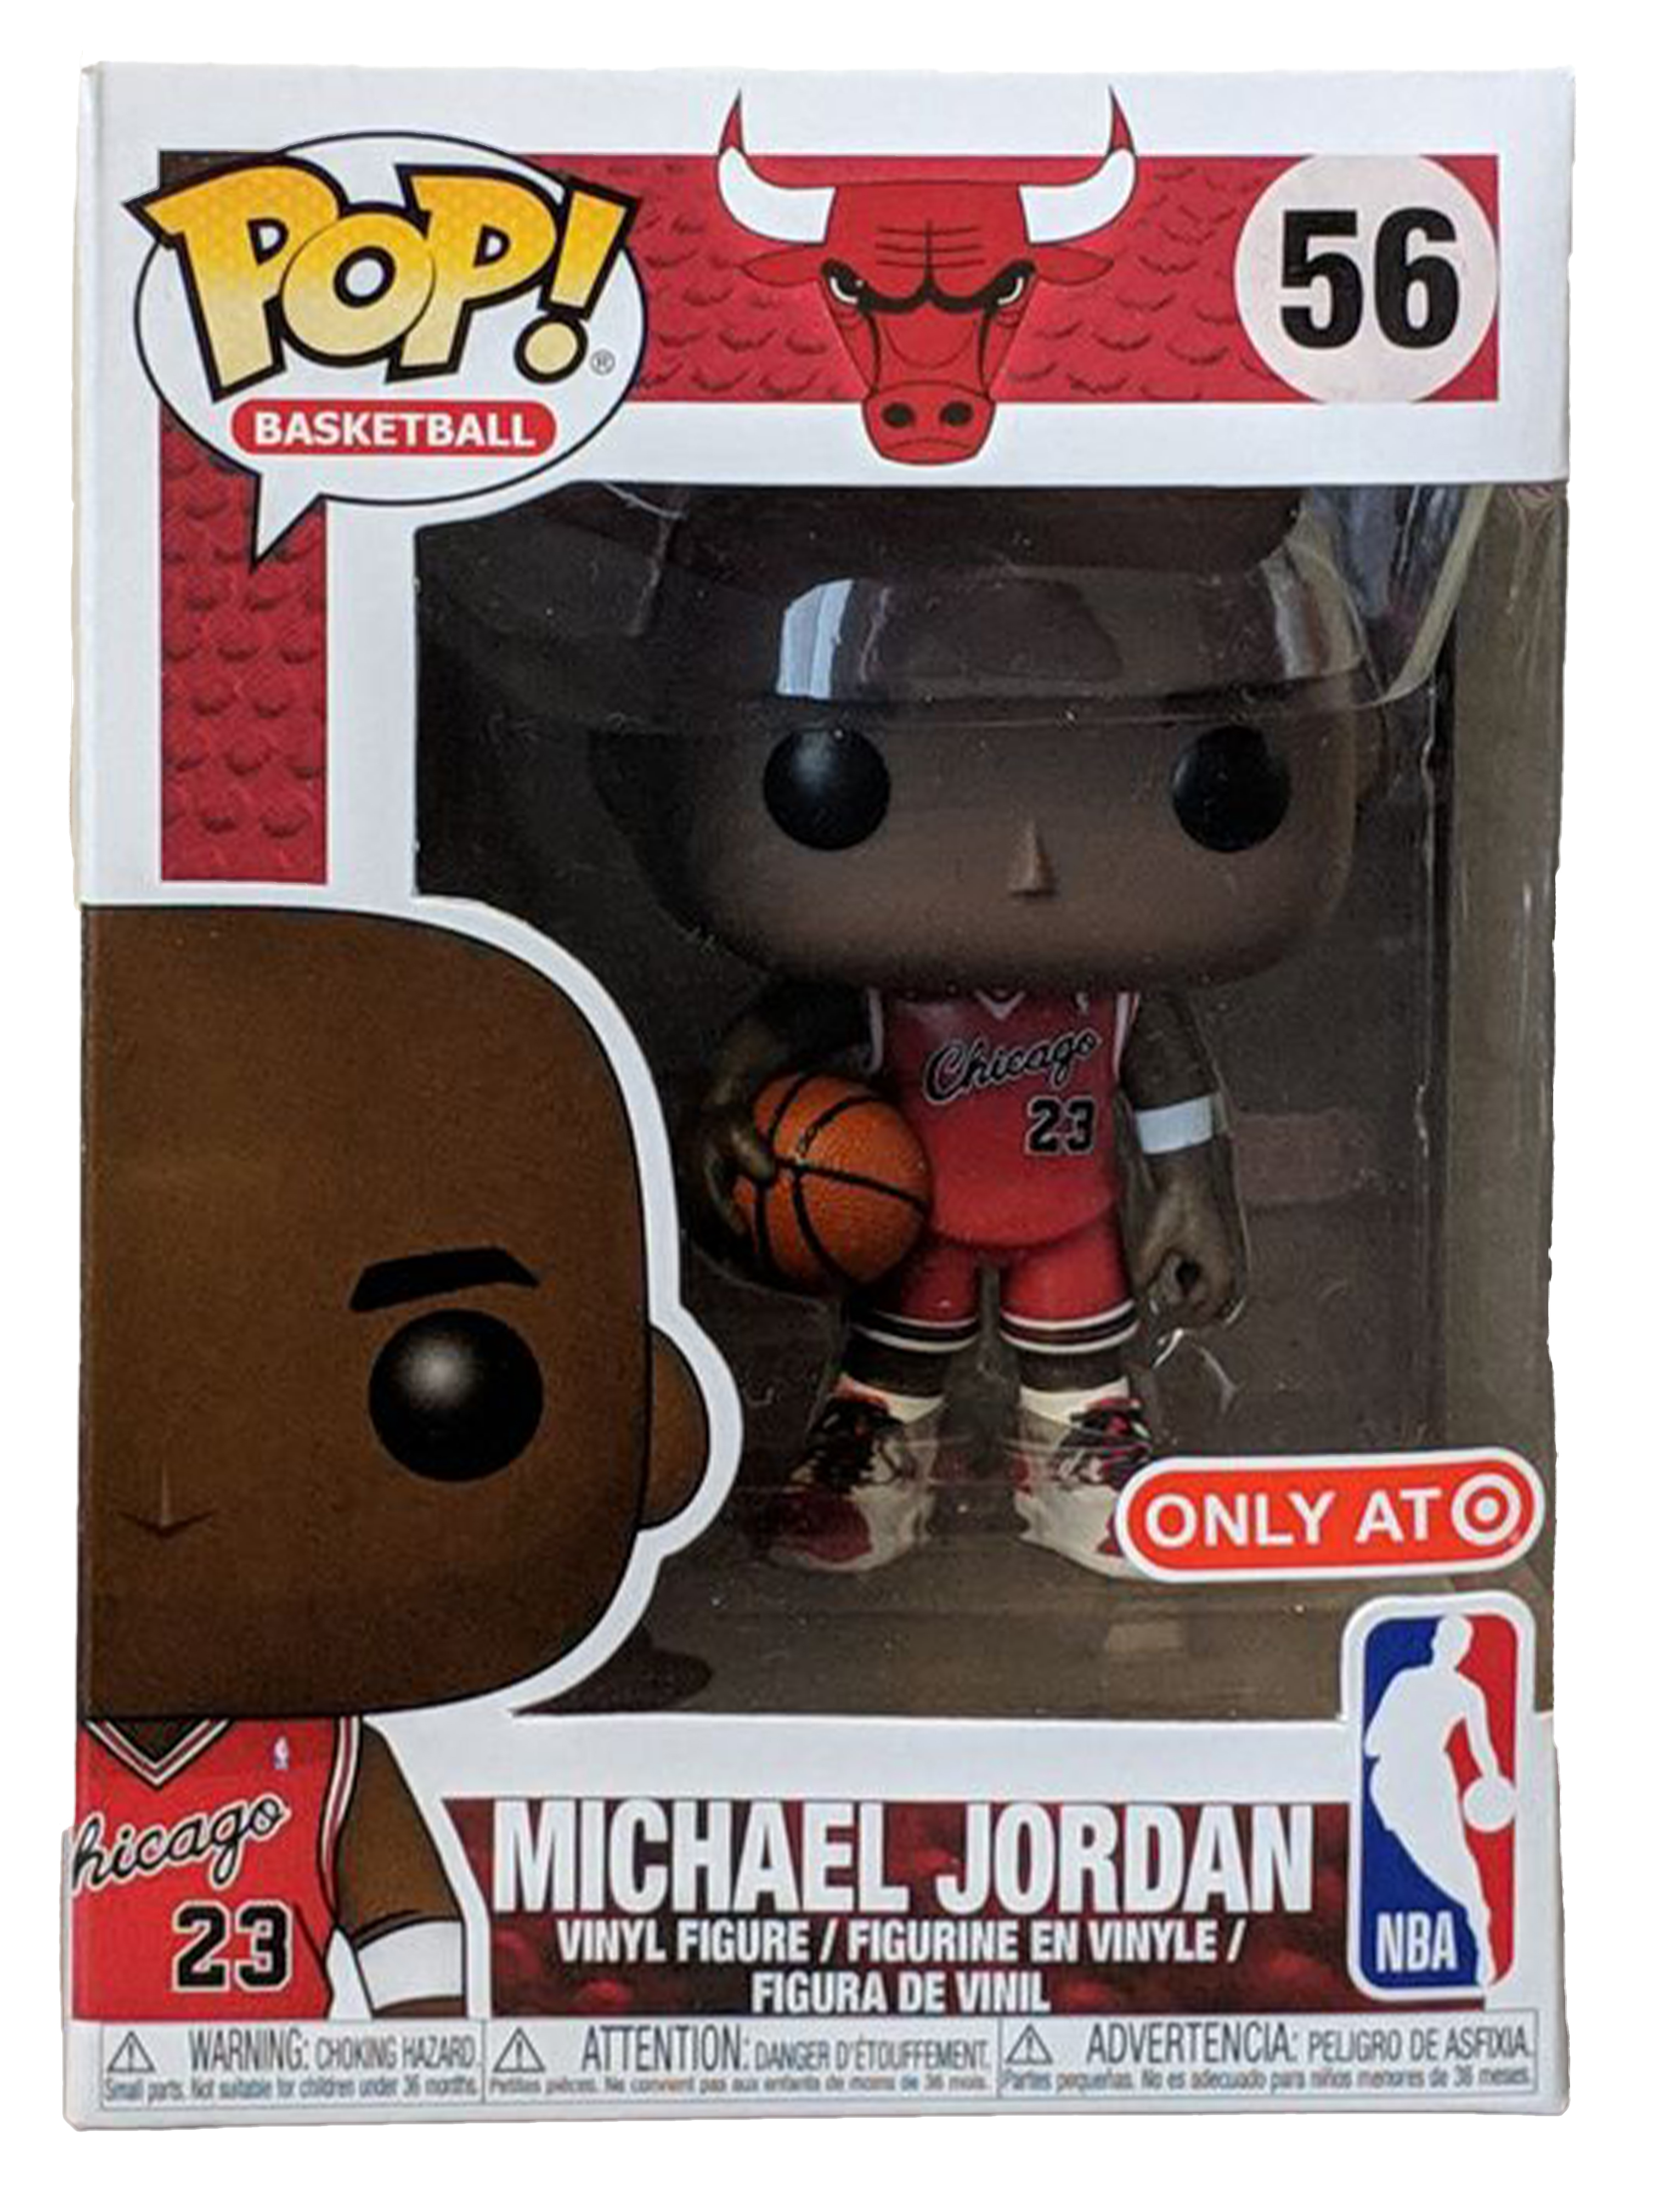 Funko Pop! Basketball Michael Jordan North Carolina Jersey Figure